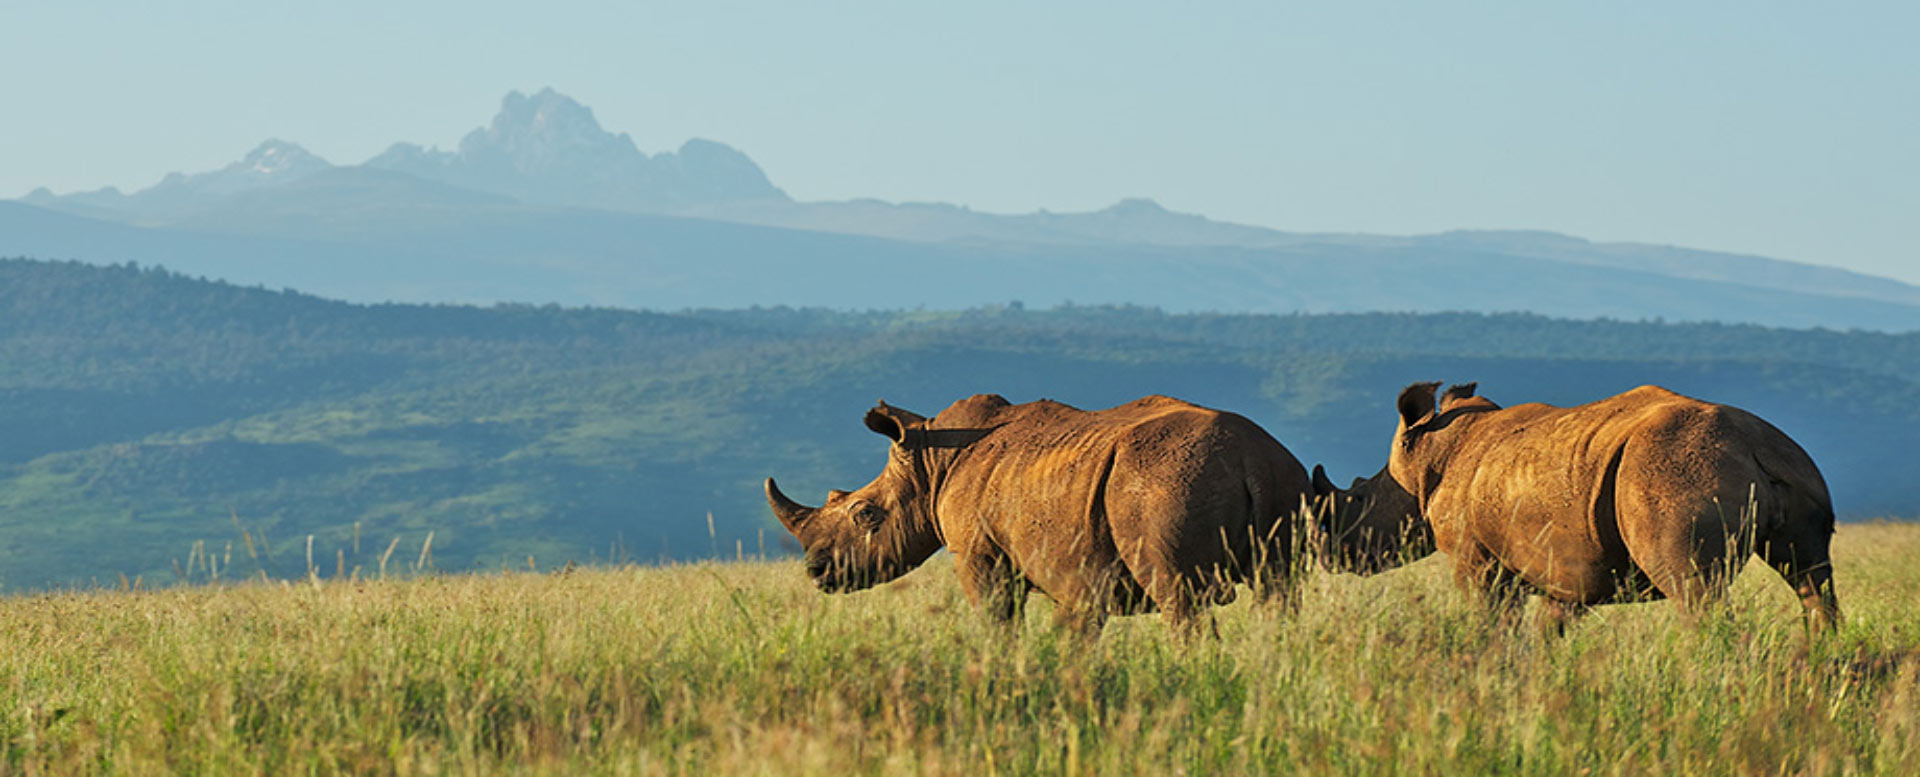 Mount Kenya National Park & Mount Kenya